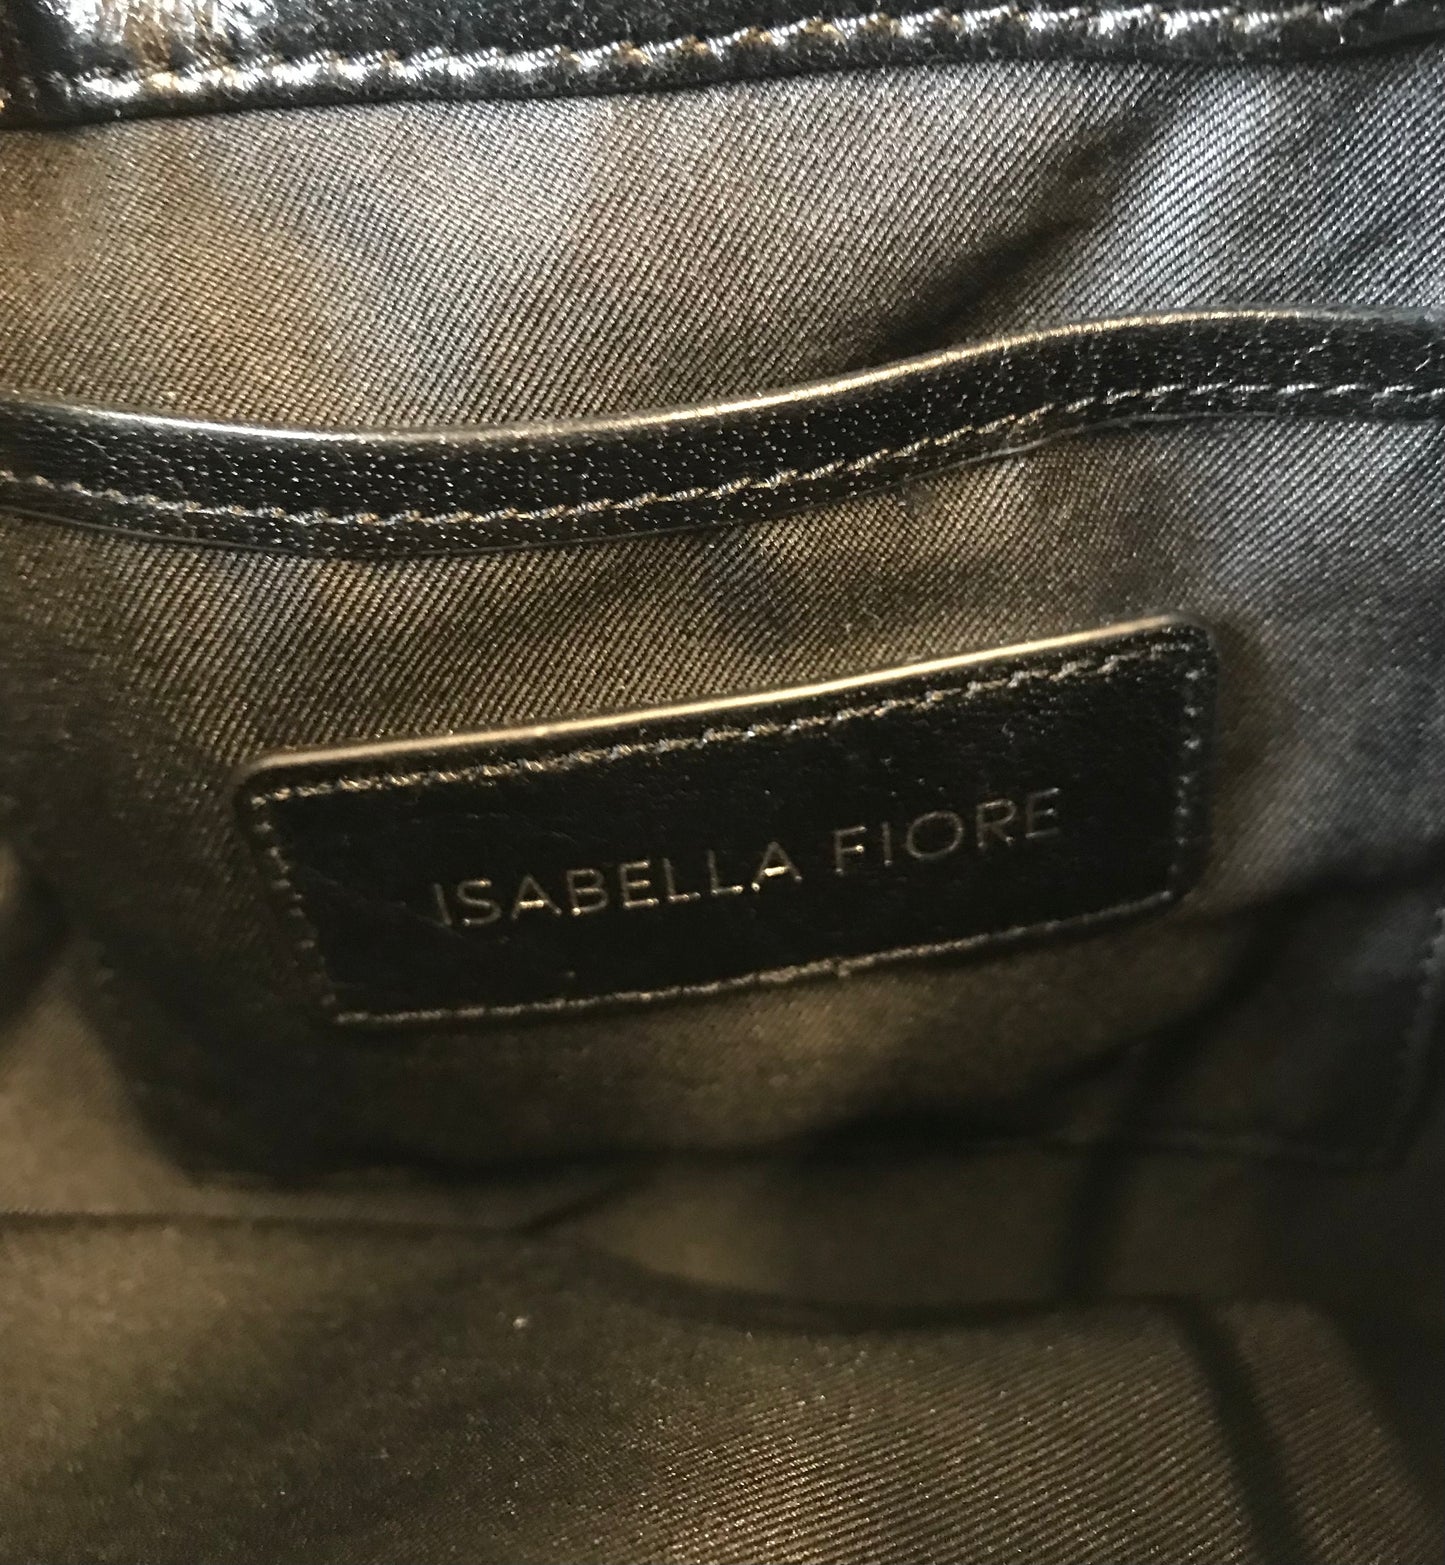 Handbag Designer By Isabella Fiore  Size: Medium